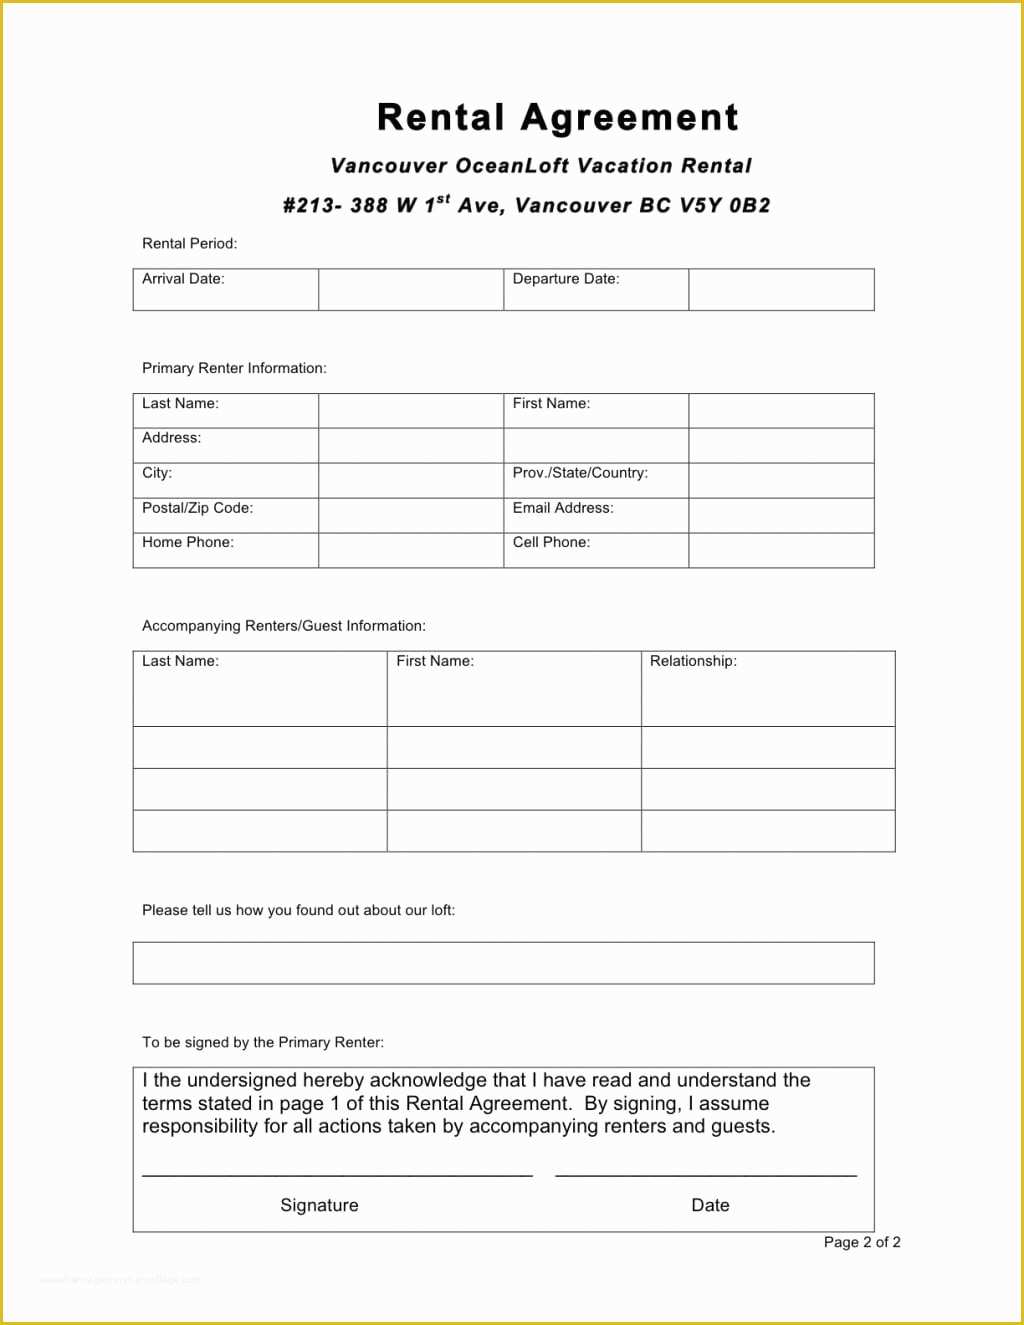 Rental Agrrement Tesidential Free Printable Forms Printable Forms 